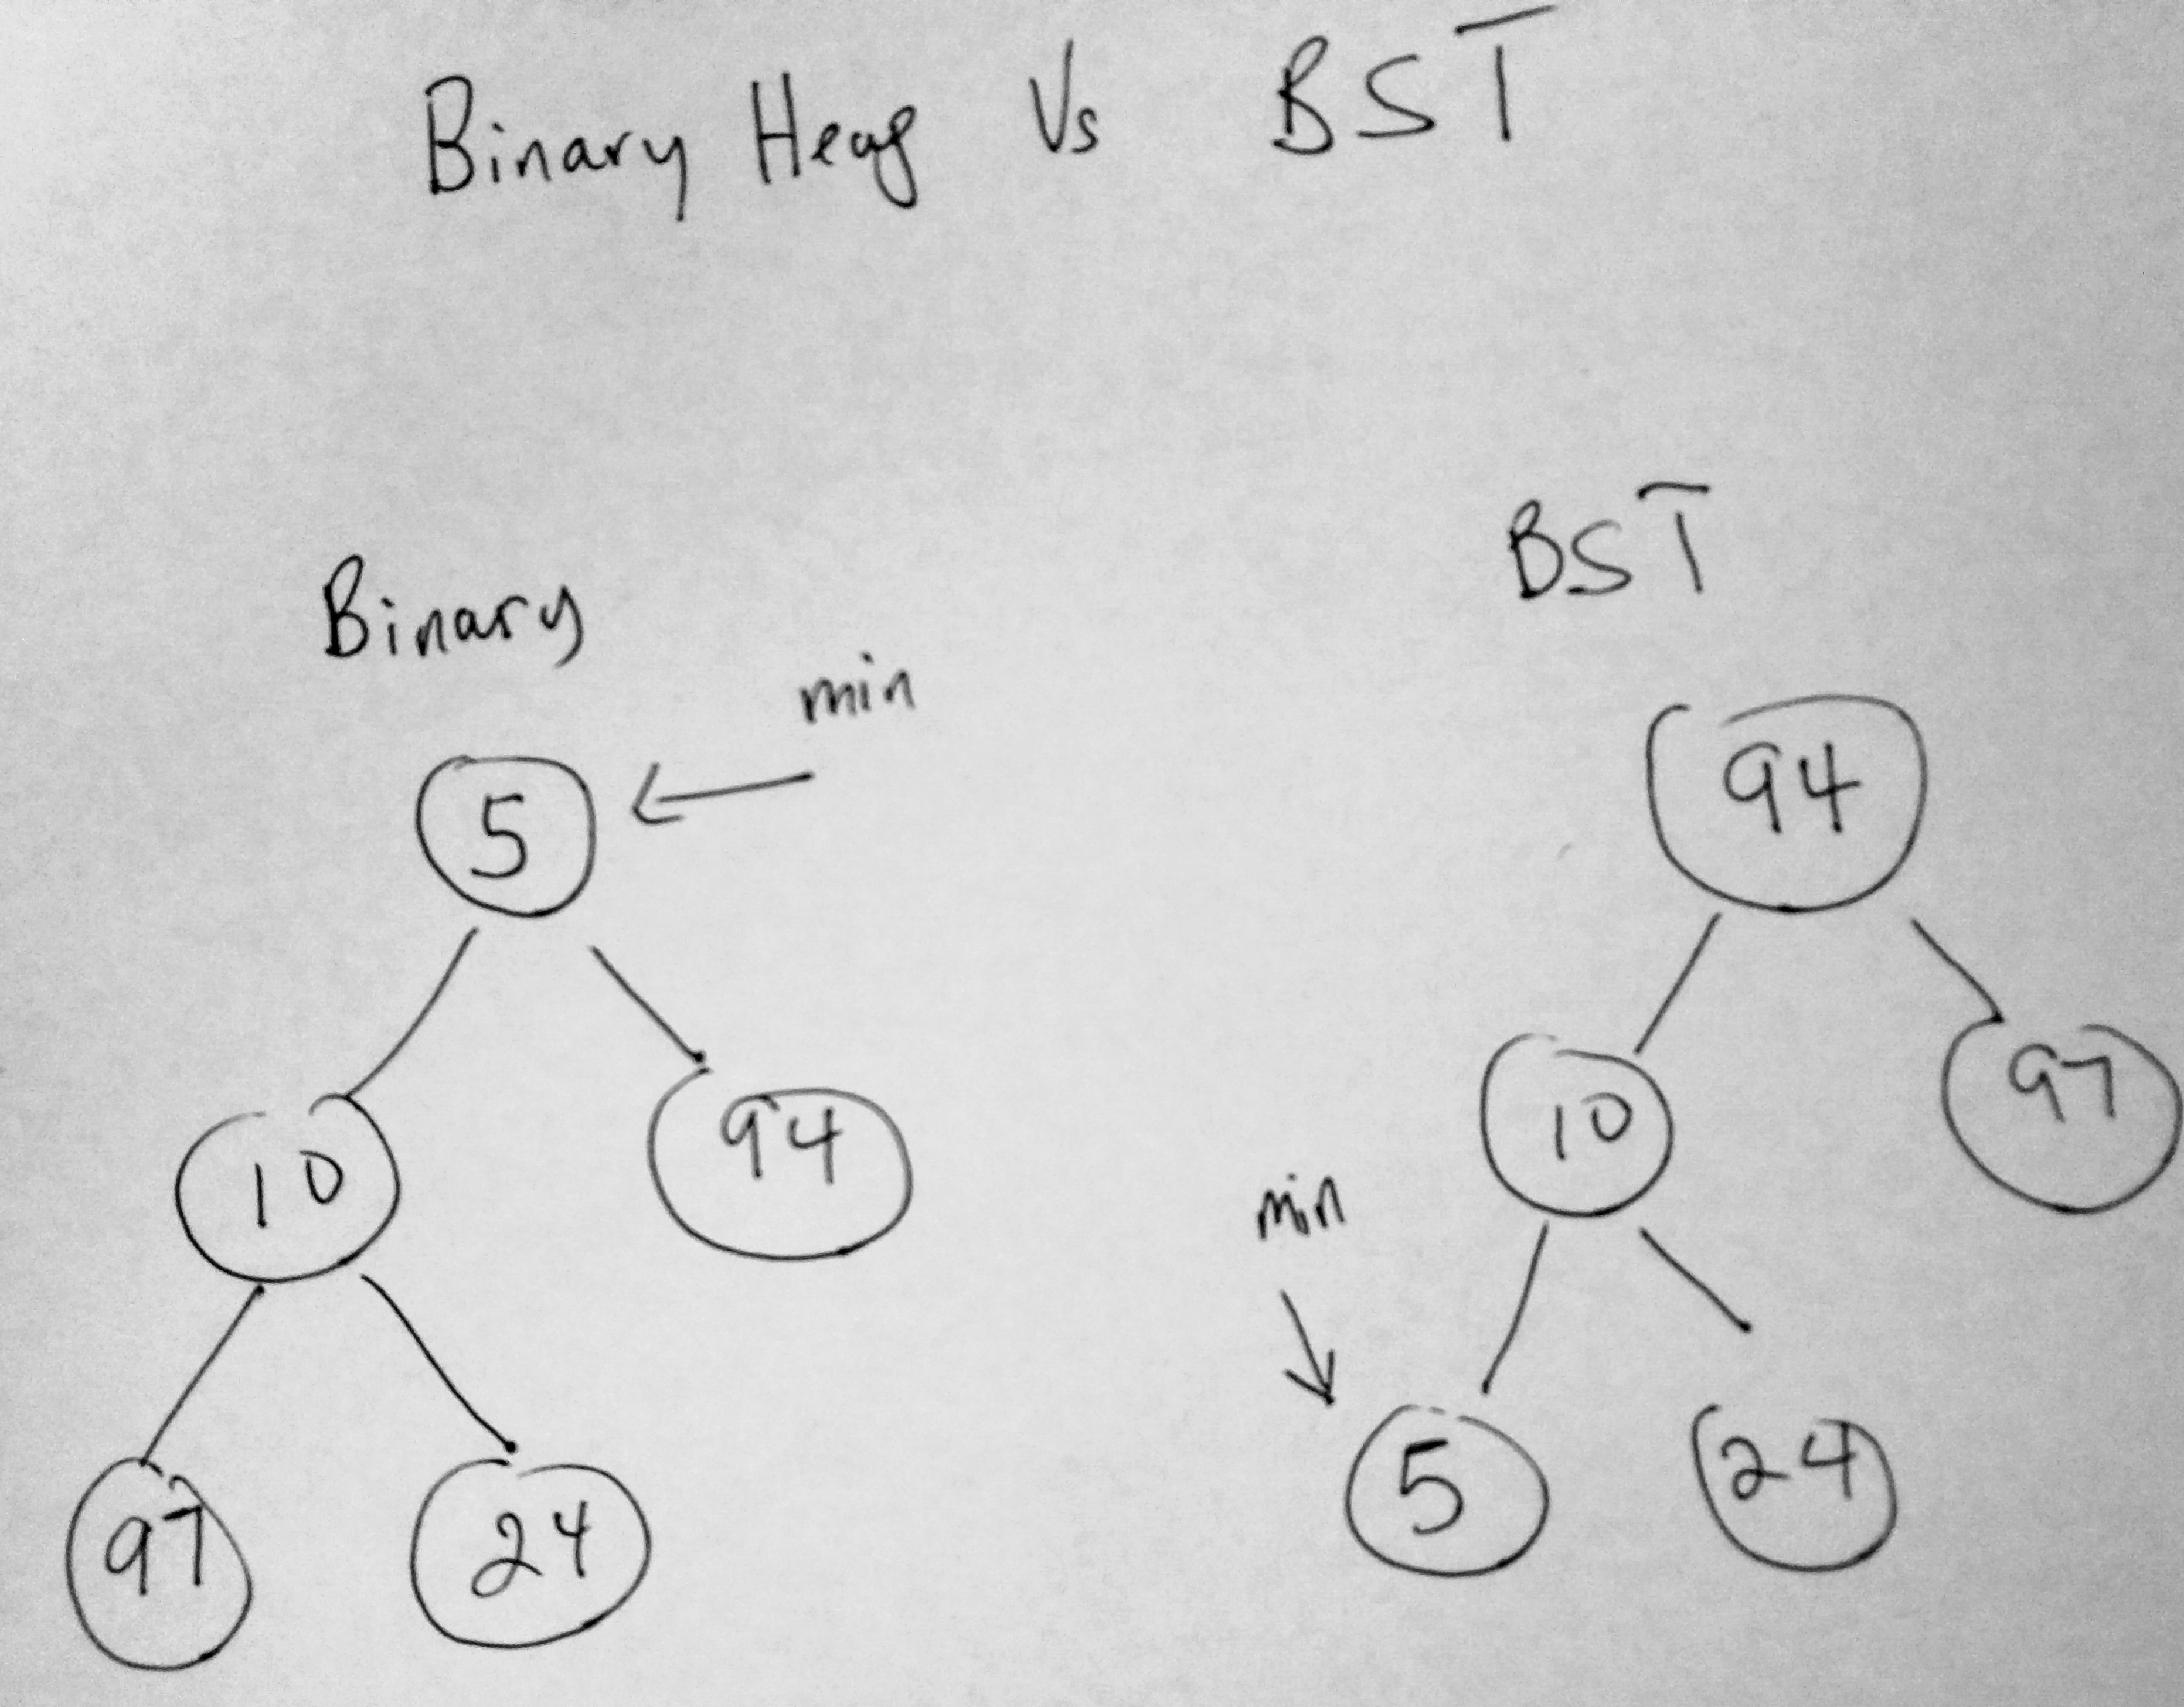 binary heap vs bst